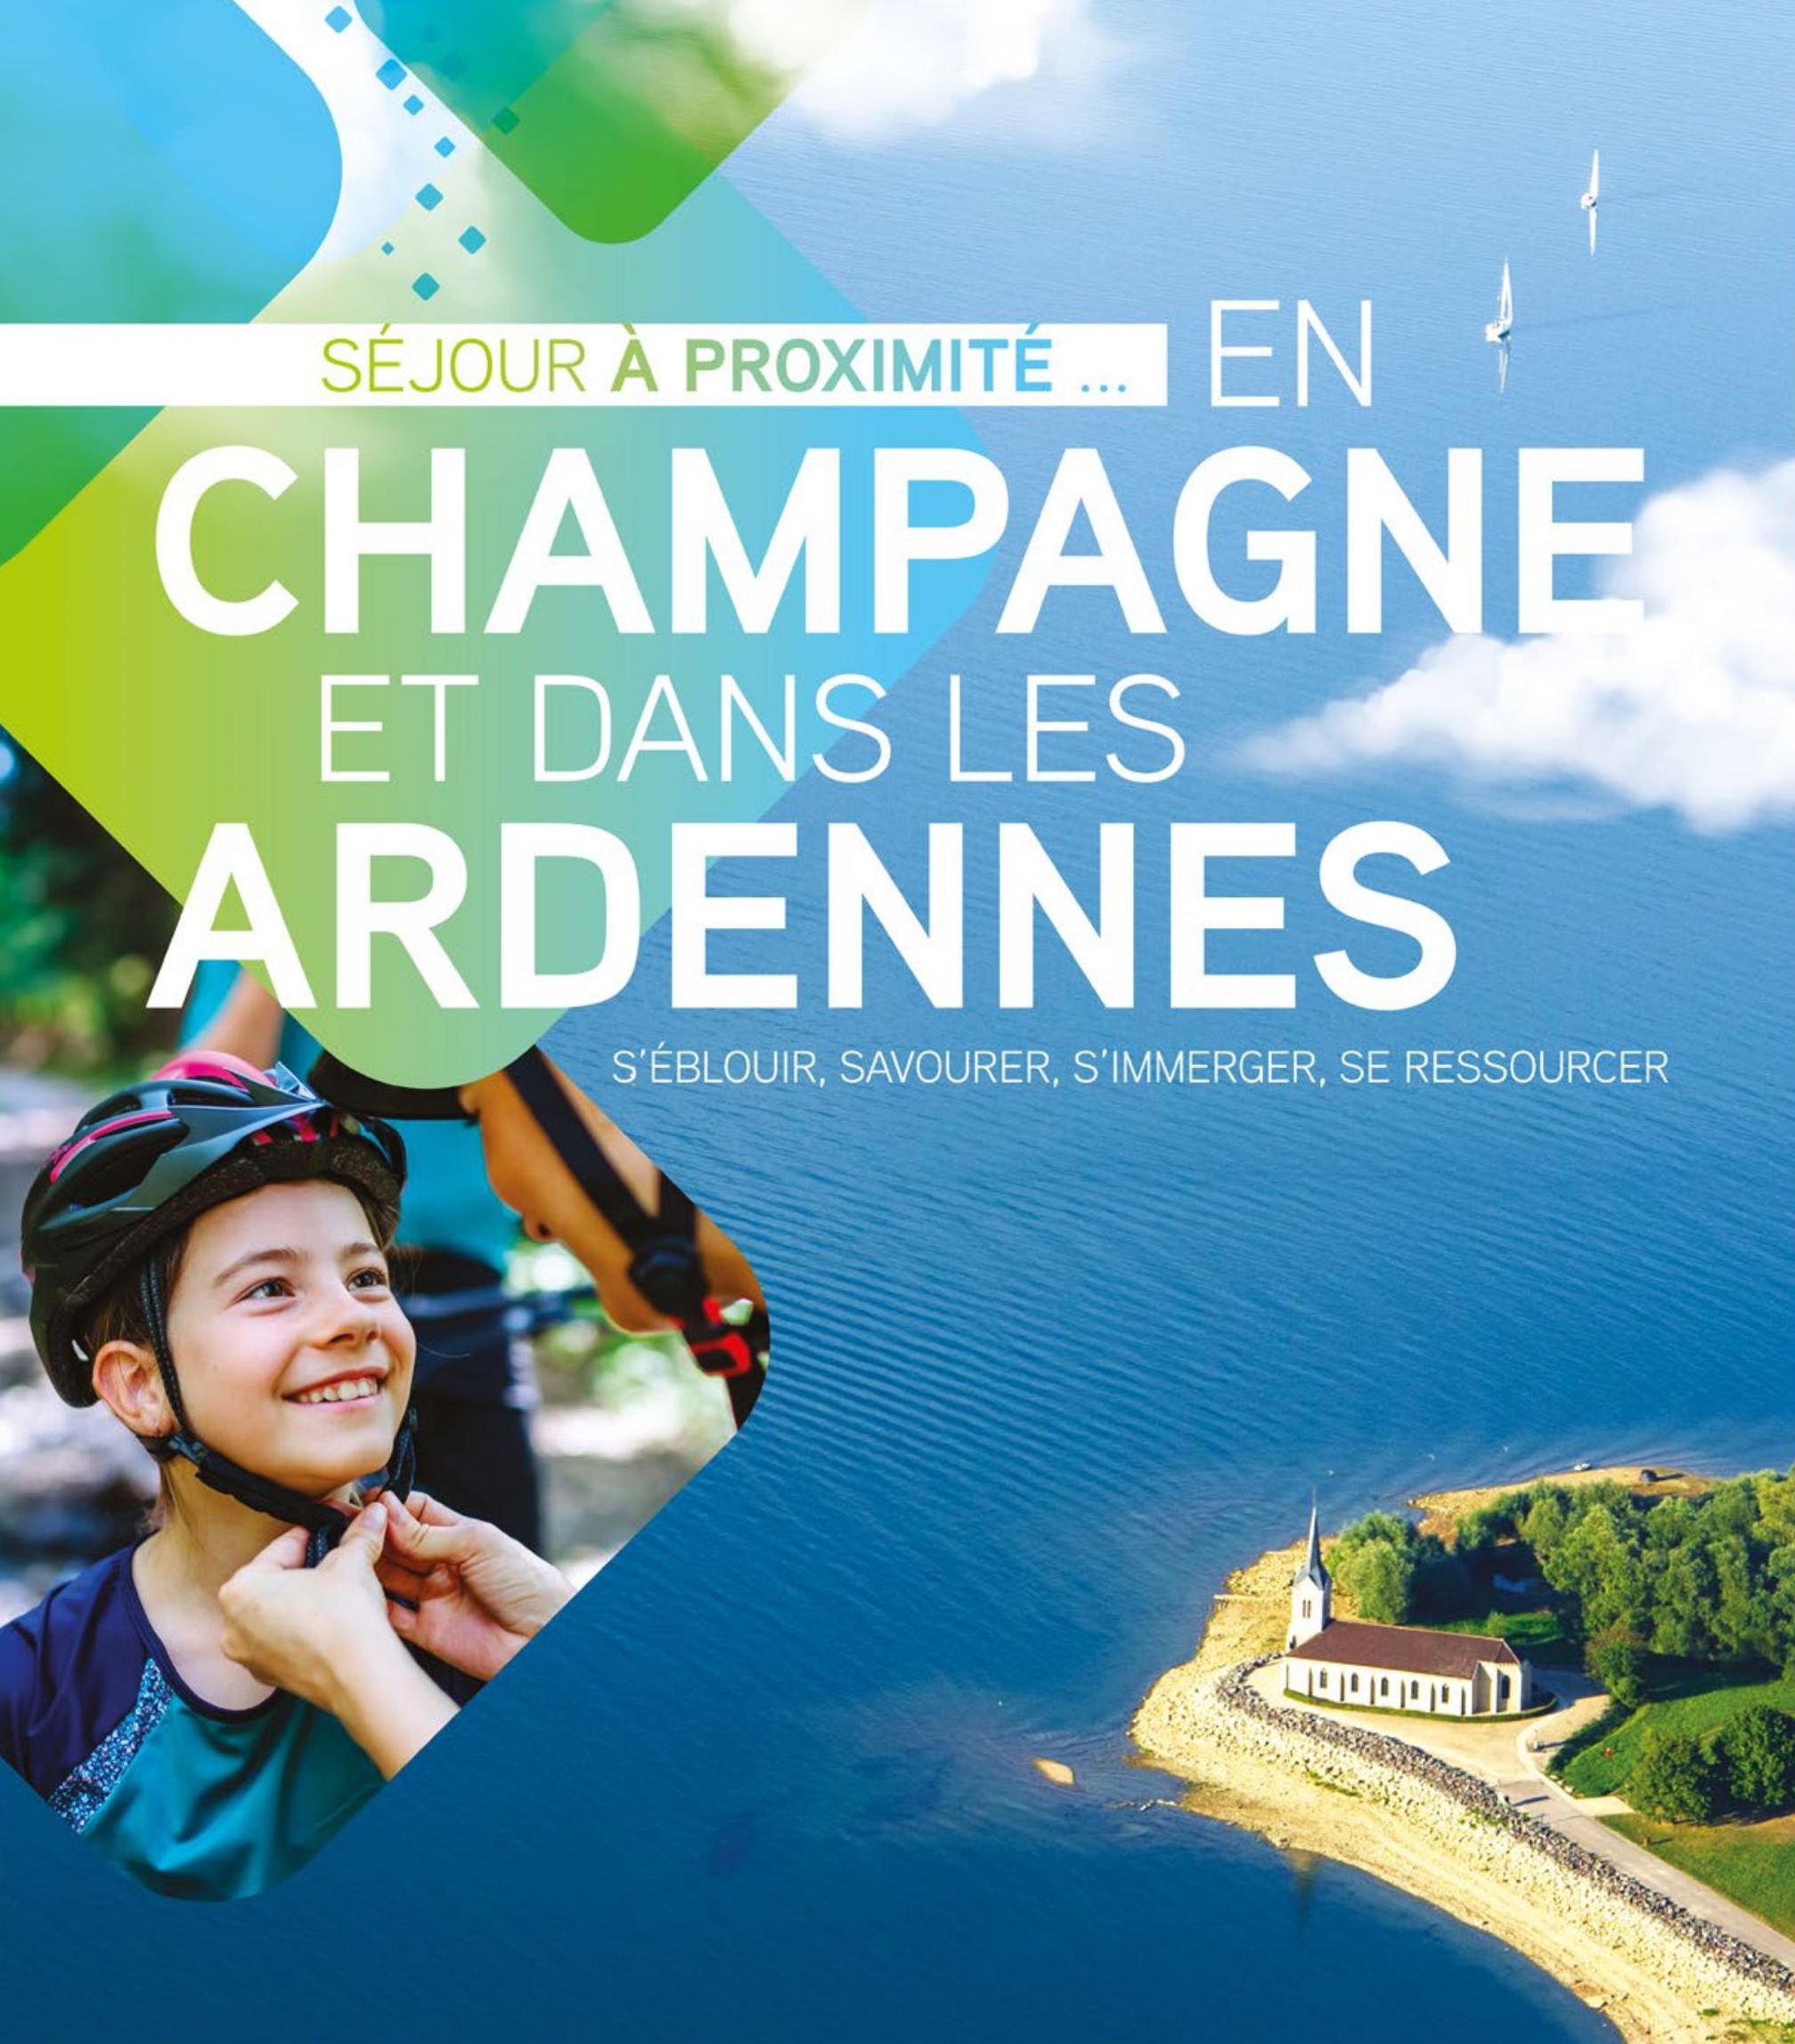 INVITATION - S'éblouir, savourer, s'immerger, se ressourcer en Champagne et dans les Ardennes